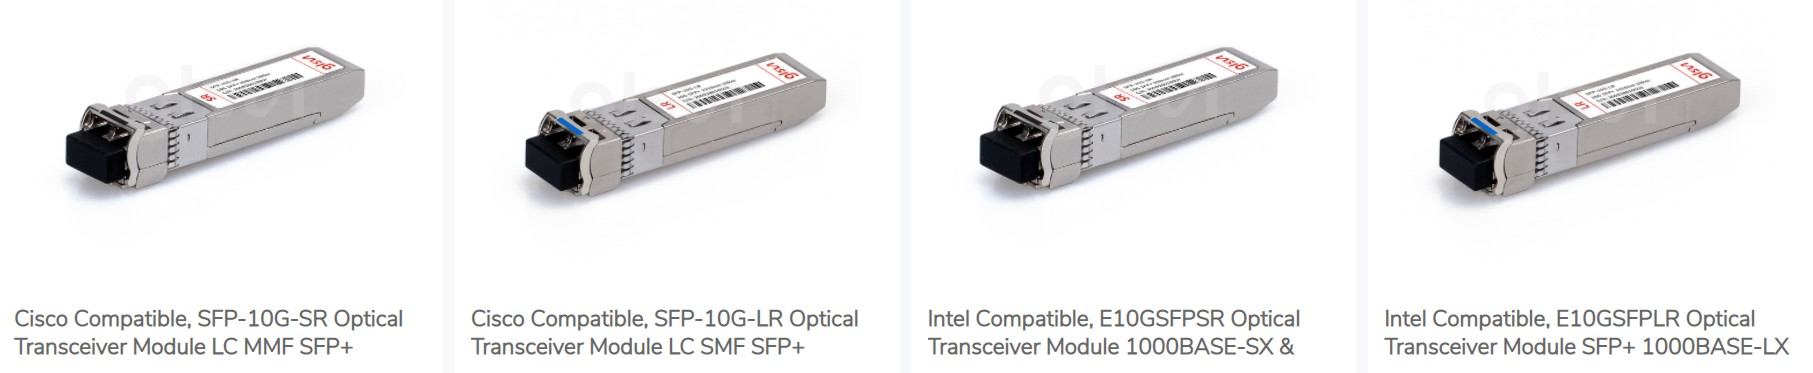 10G SFP+ Fiber Optical Transceiver Modules, Optic Transceivers|GlsunMall